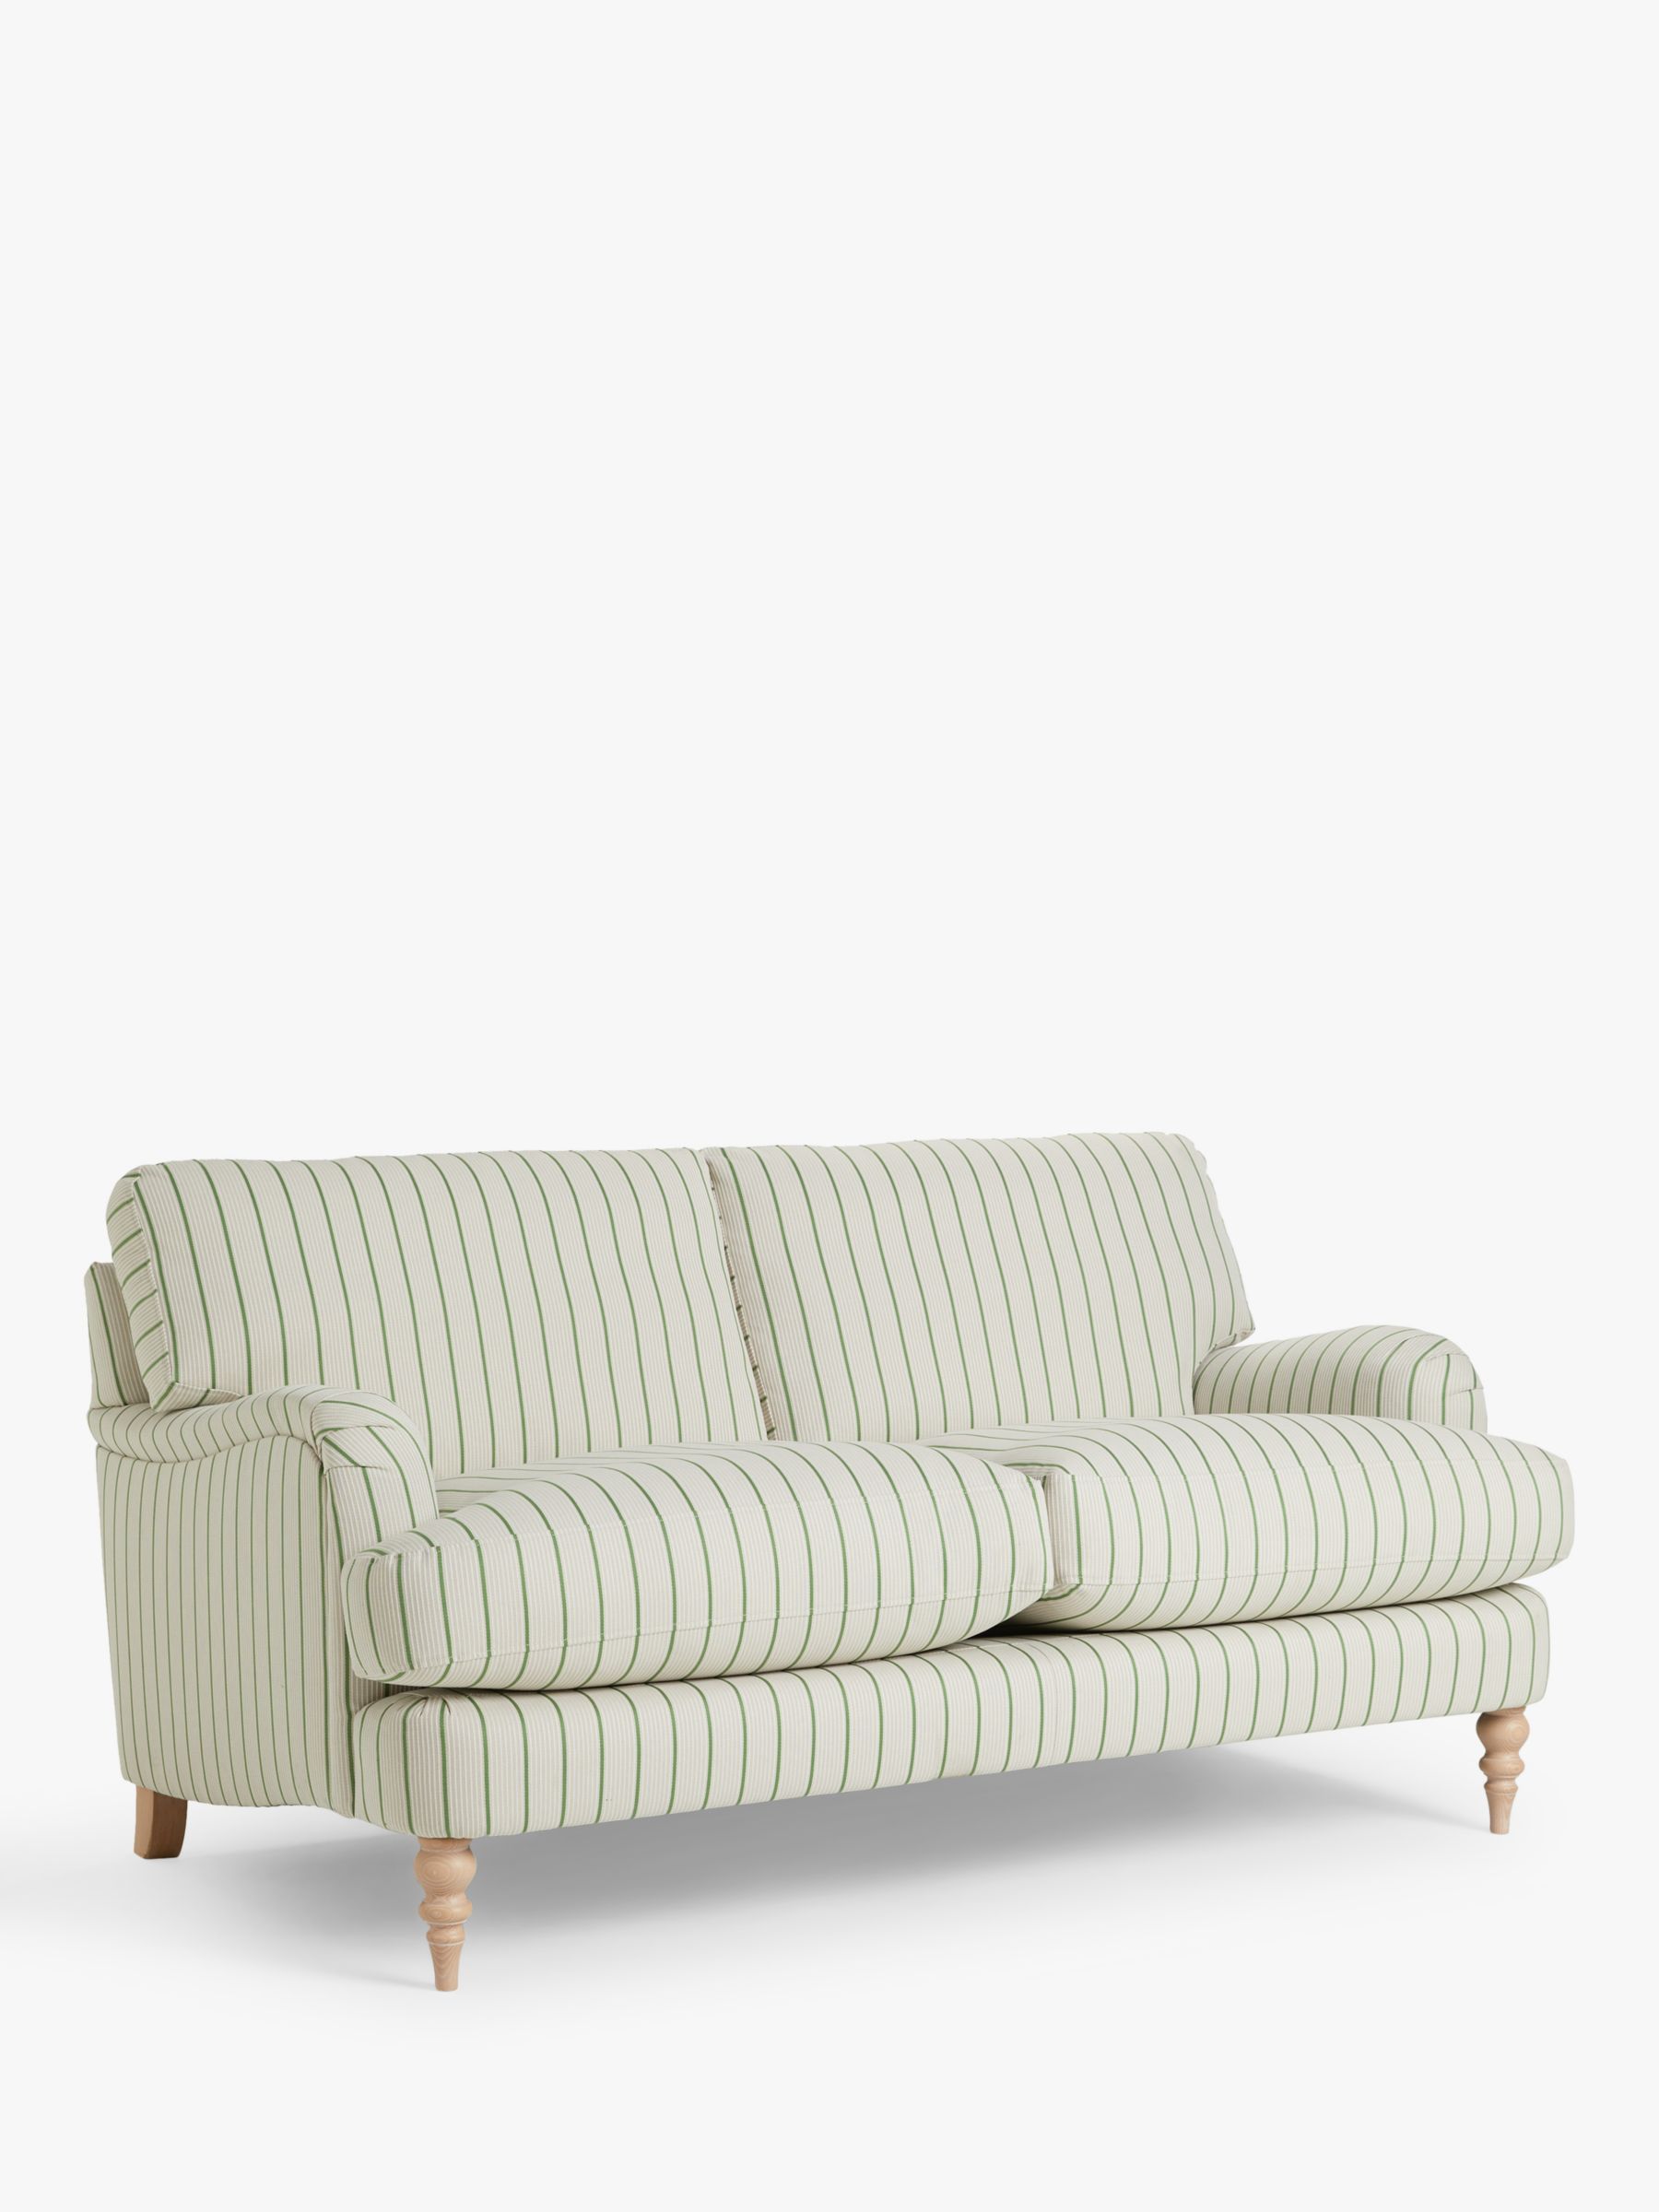 Otley Range, John Lewis Otley Medium 2 Seater Sofa, Light Leg, Easy Clean Ticking Stripe Green